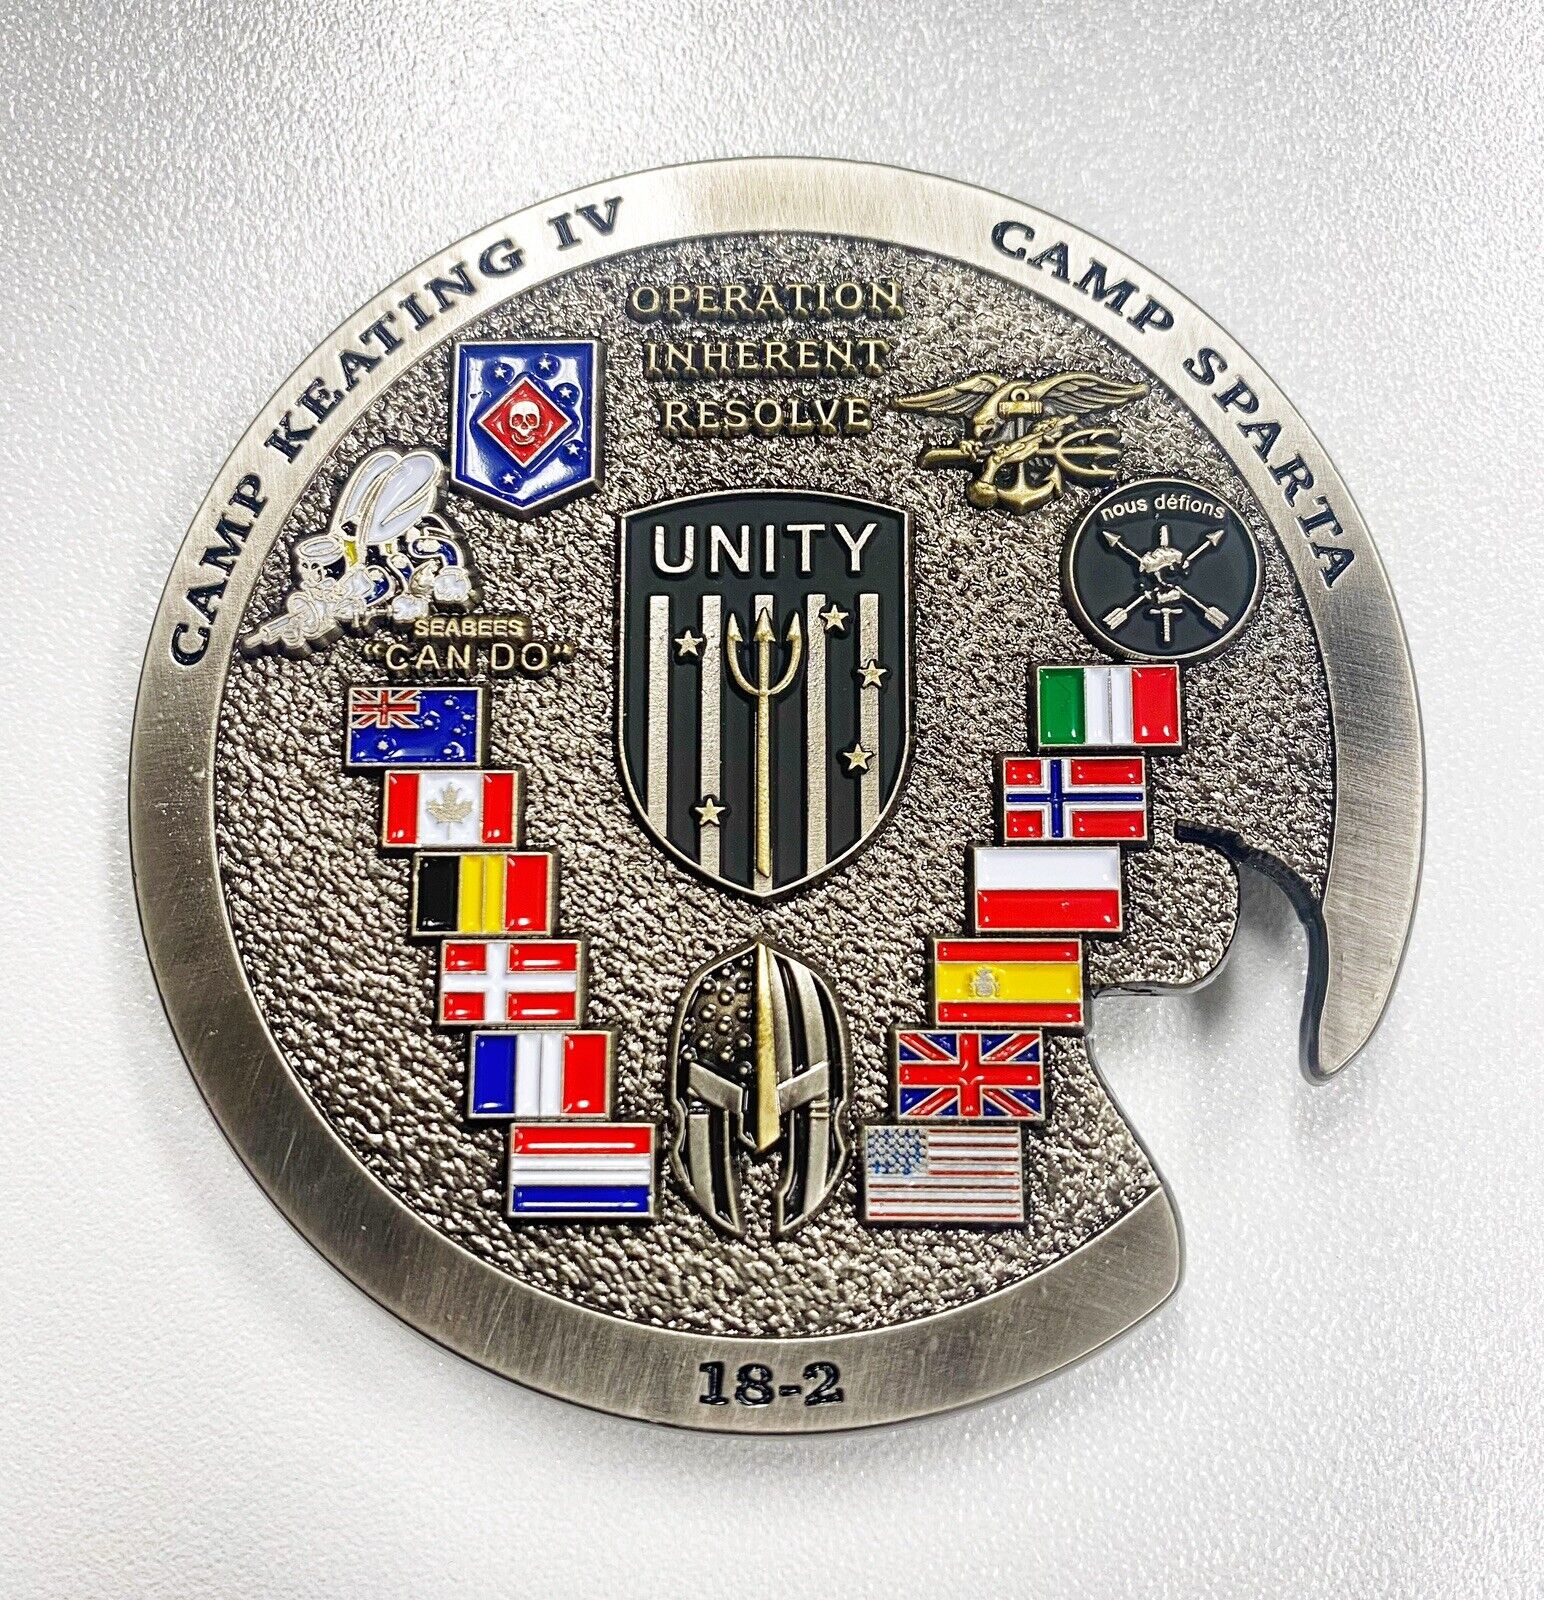 RARE 18-2 CJSOTF Iraq Operation Inherent Resolve, Camp Sparta Challenge Coin.